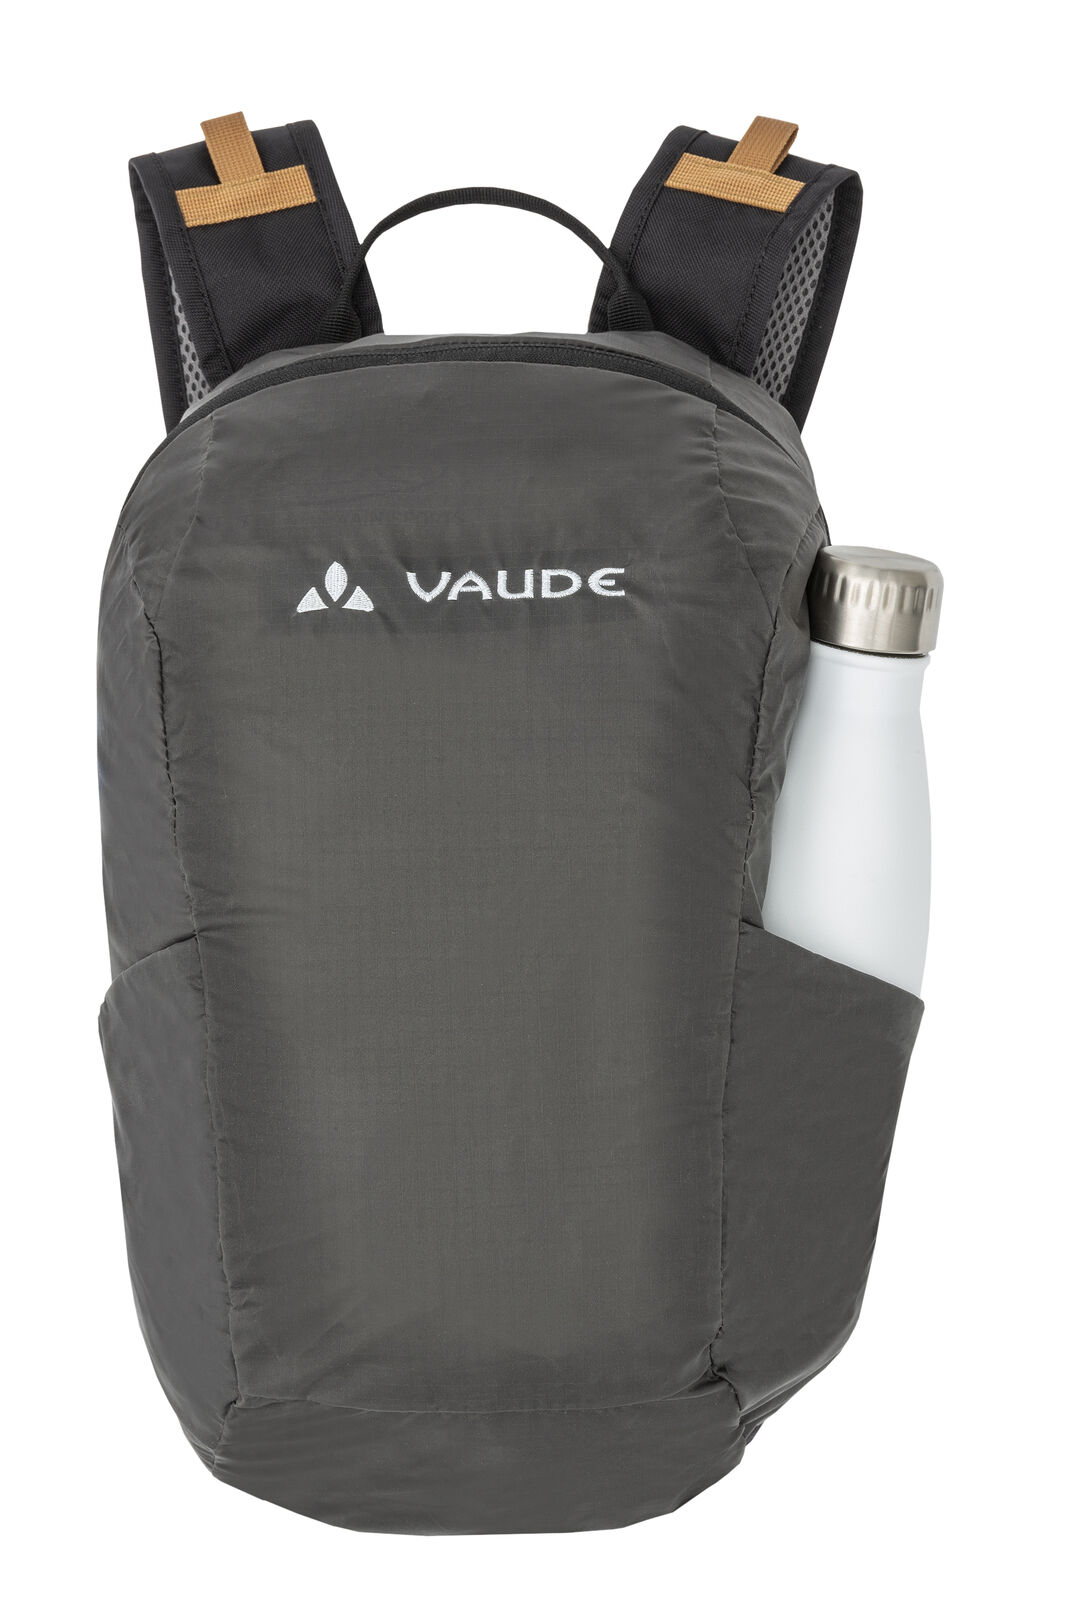 Vaude Mundo To Go - Travel backpack